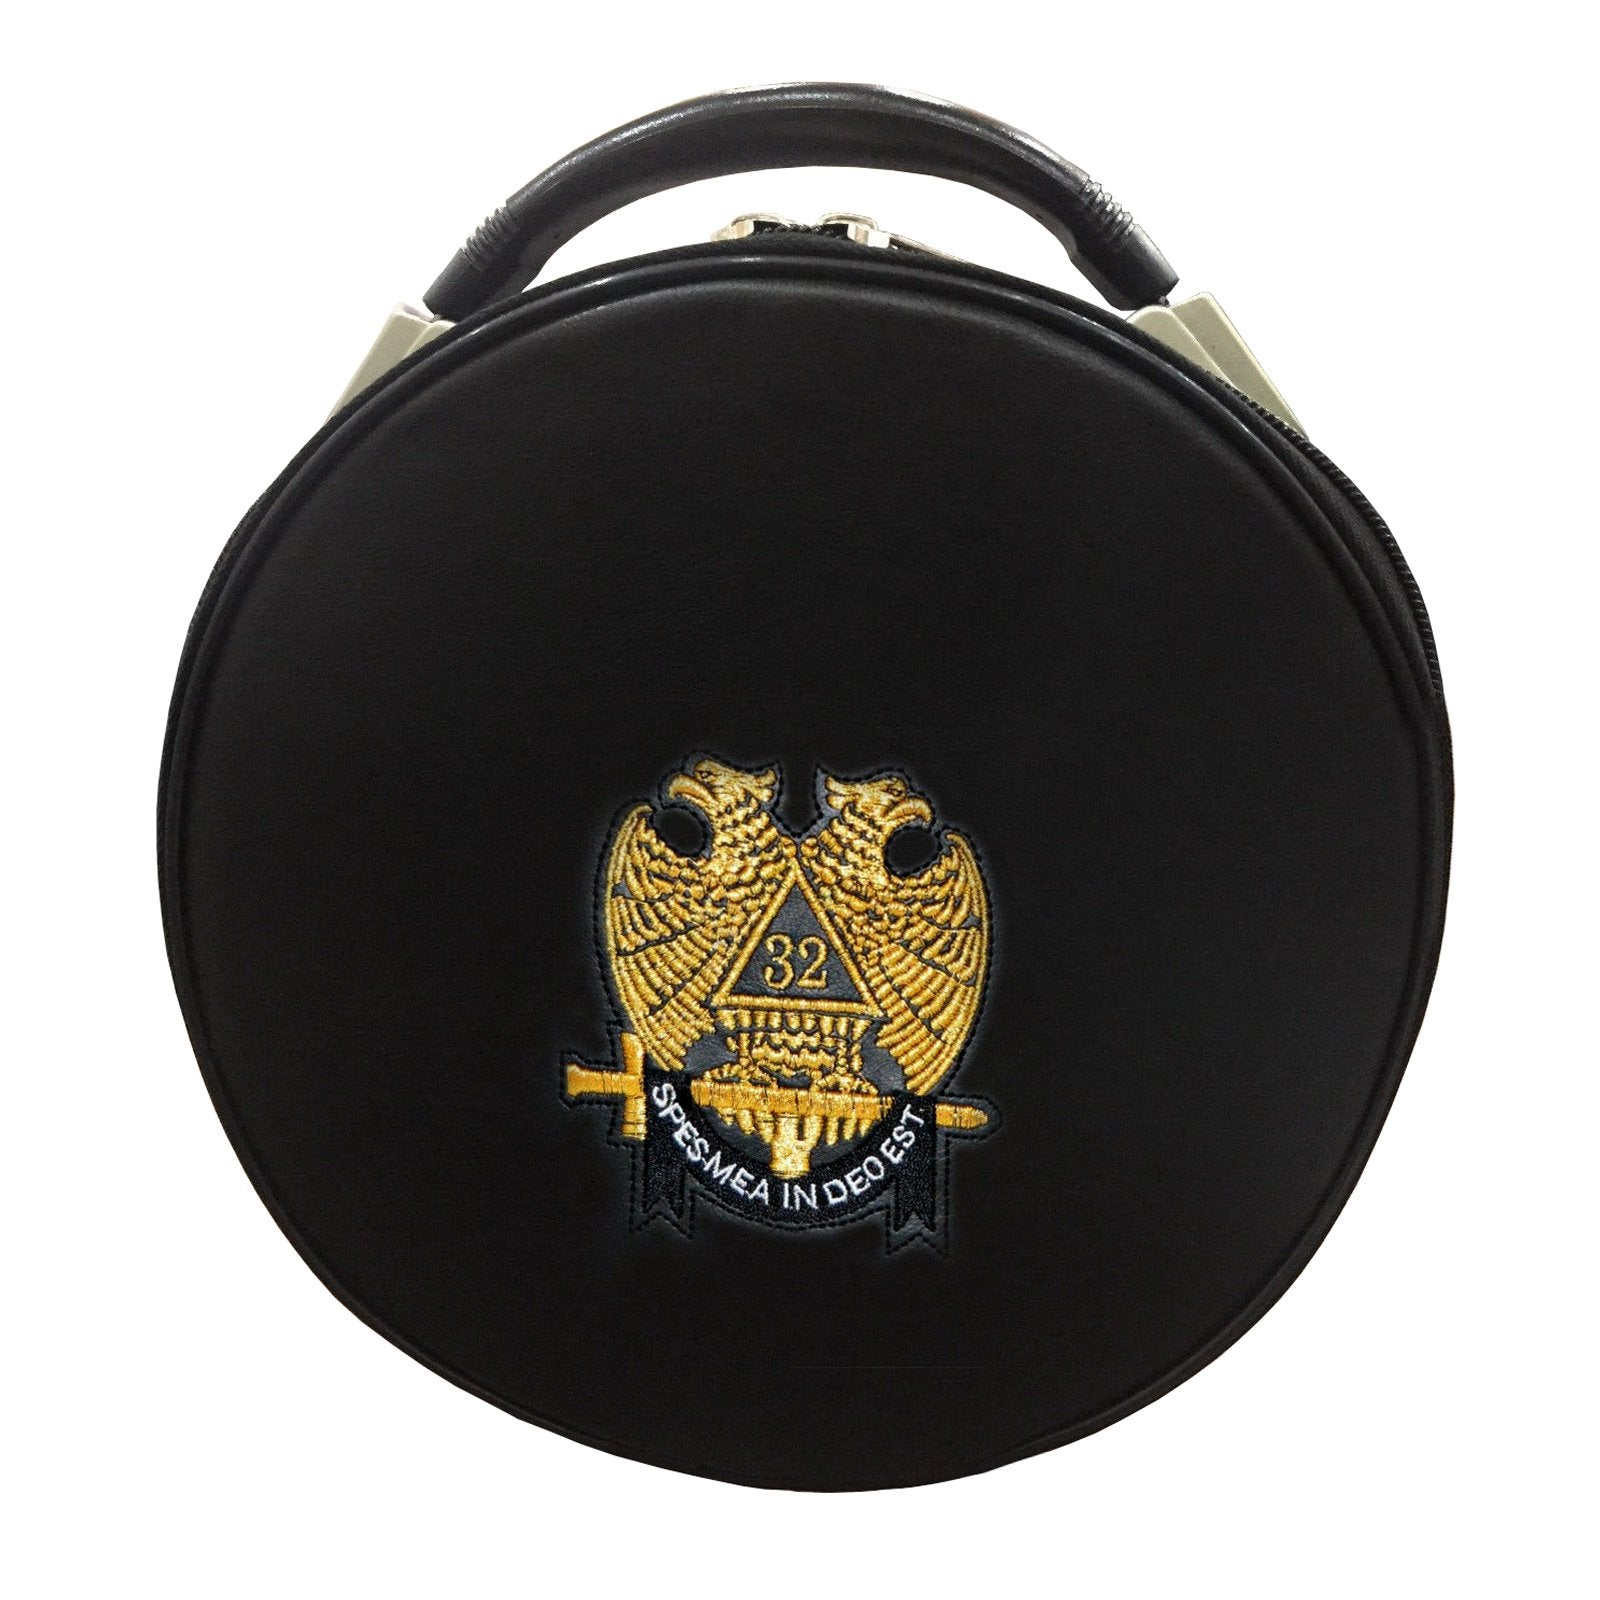 32nd Degree Scottish Rite Crown Cap Case - Double Eagle Black